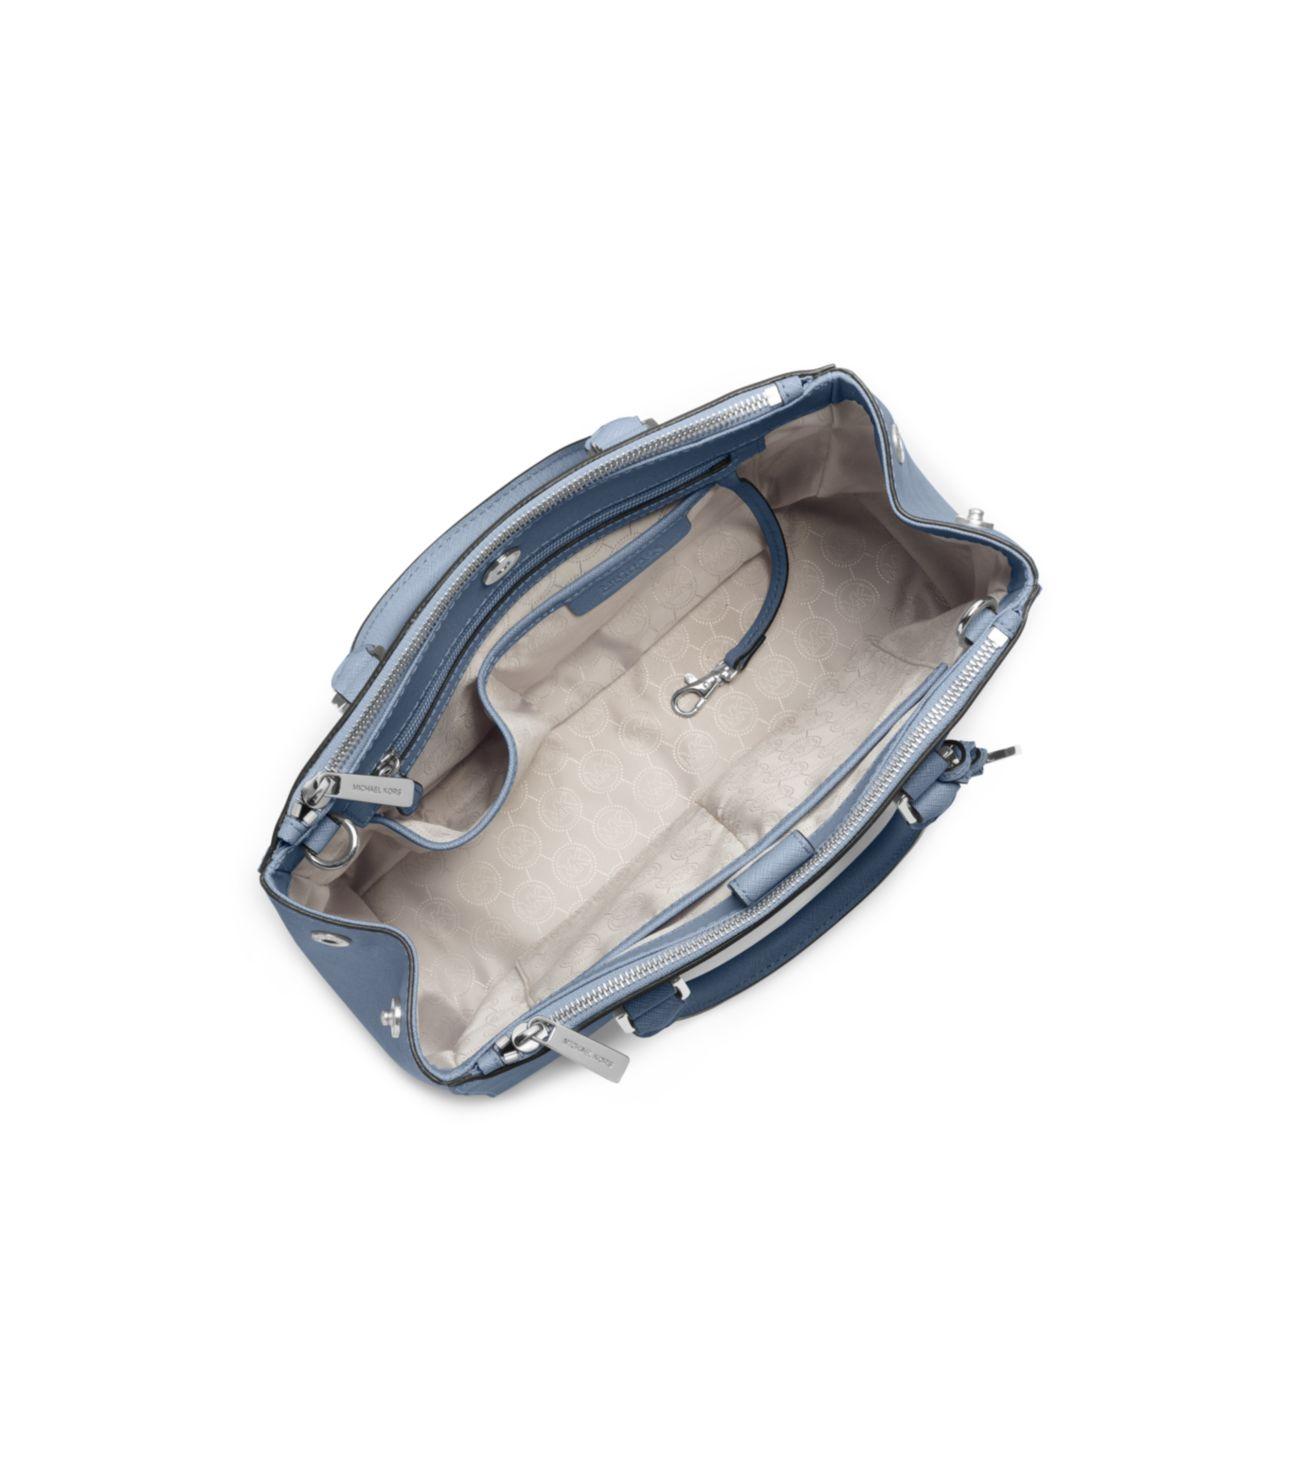 sutton medium saffiano leather satchel